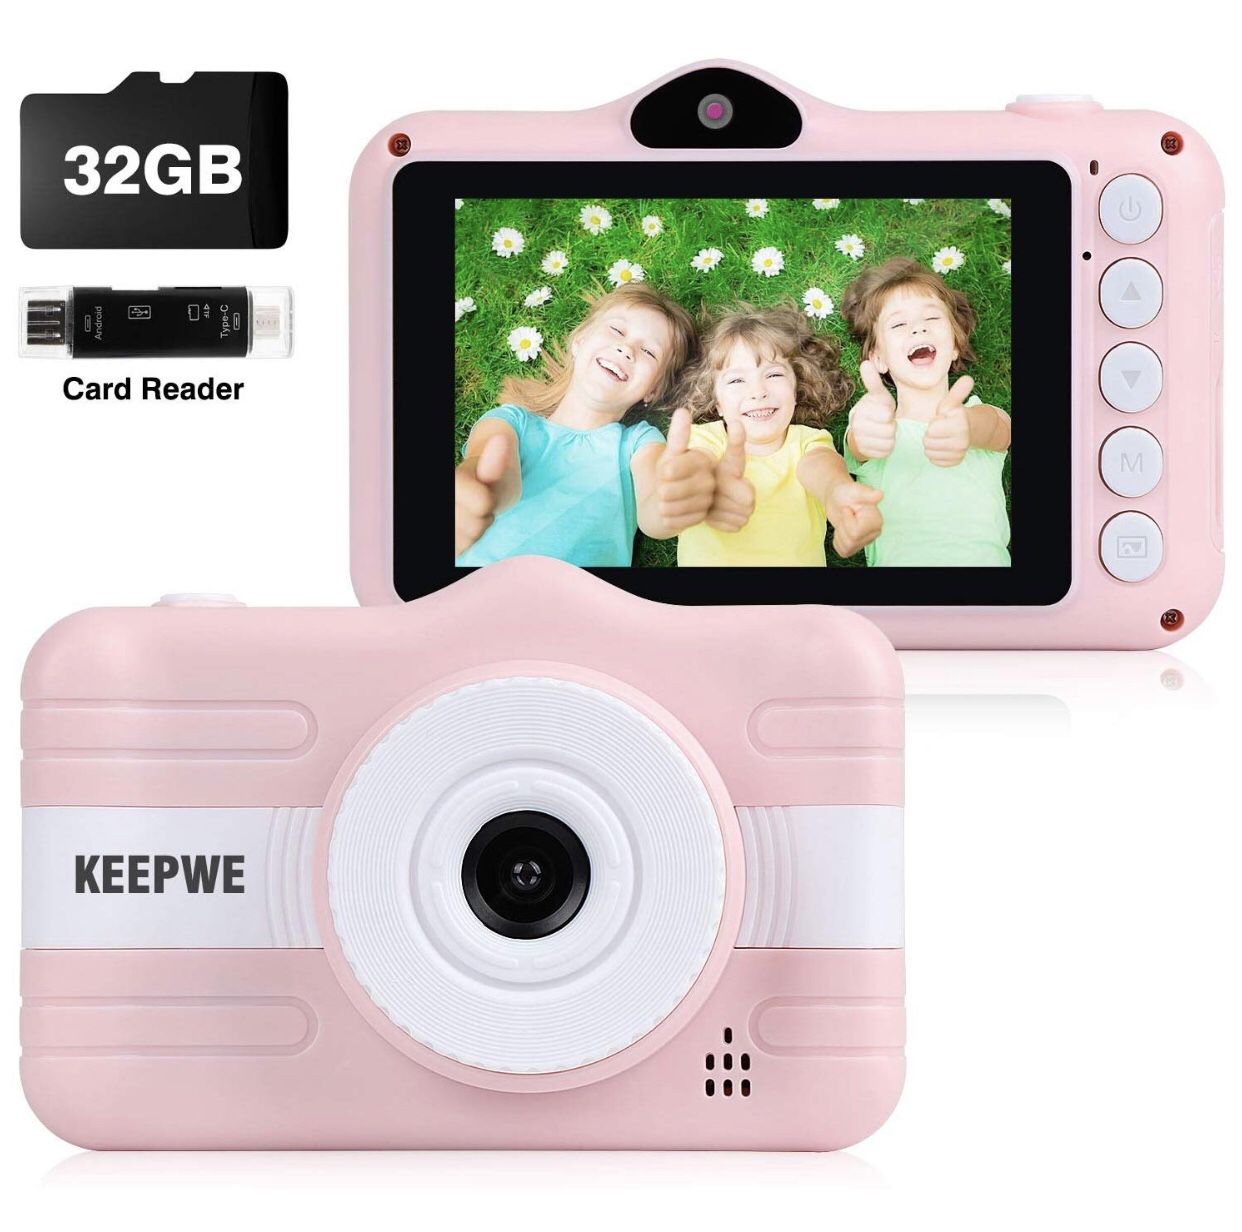 Digital camera for kids